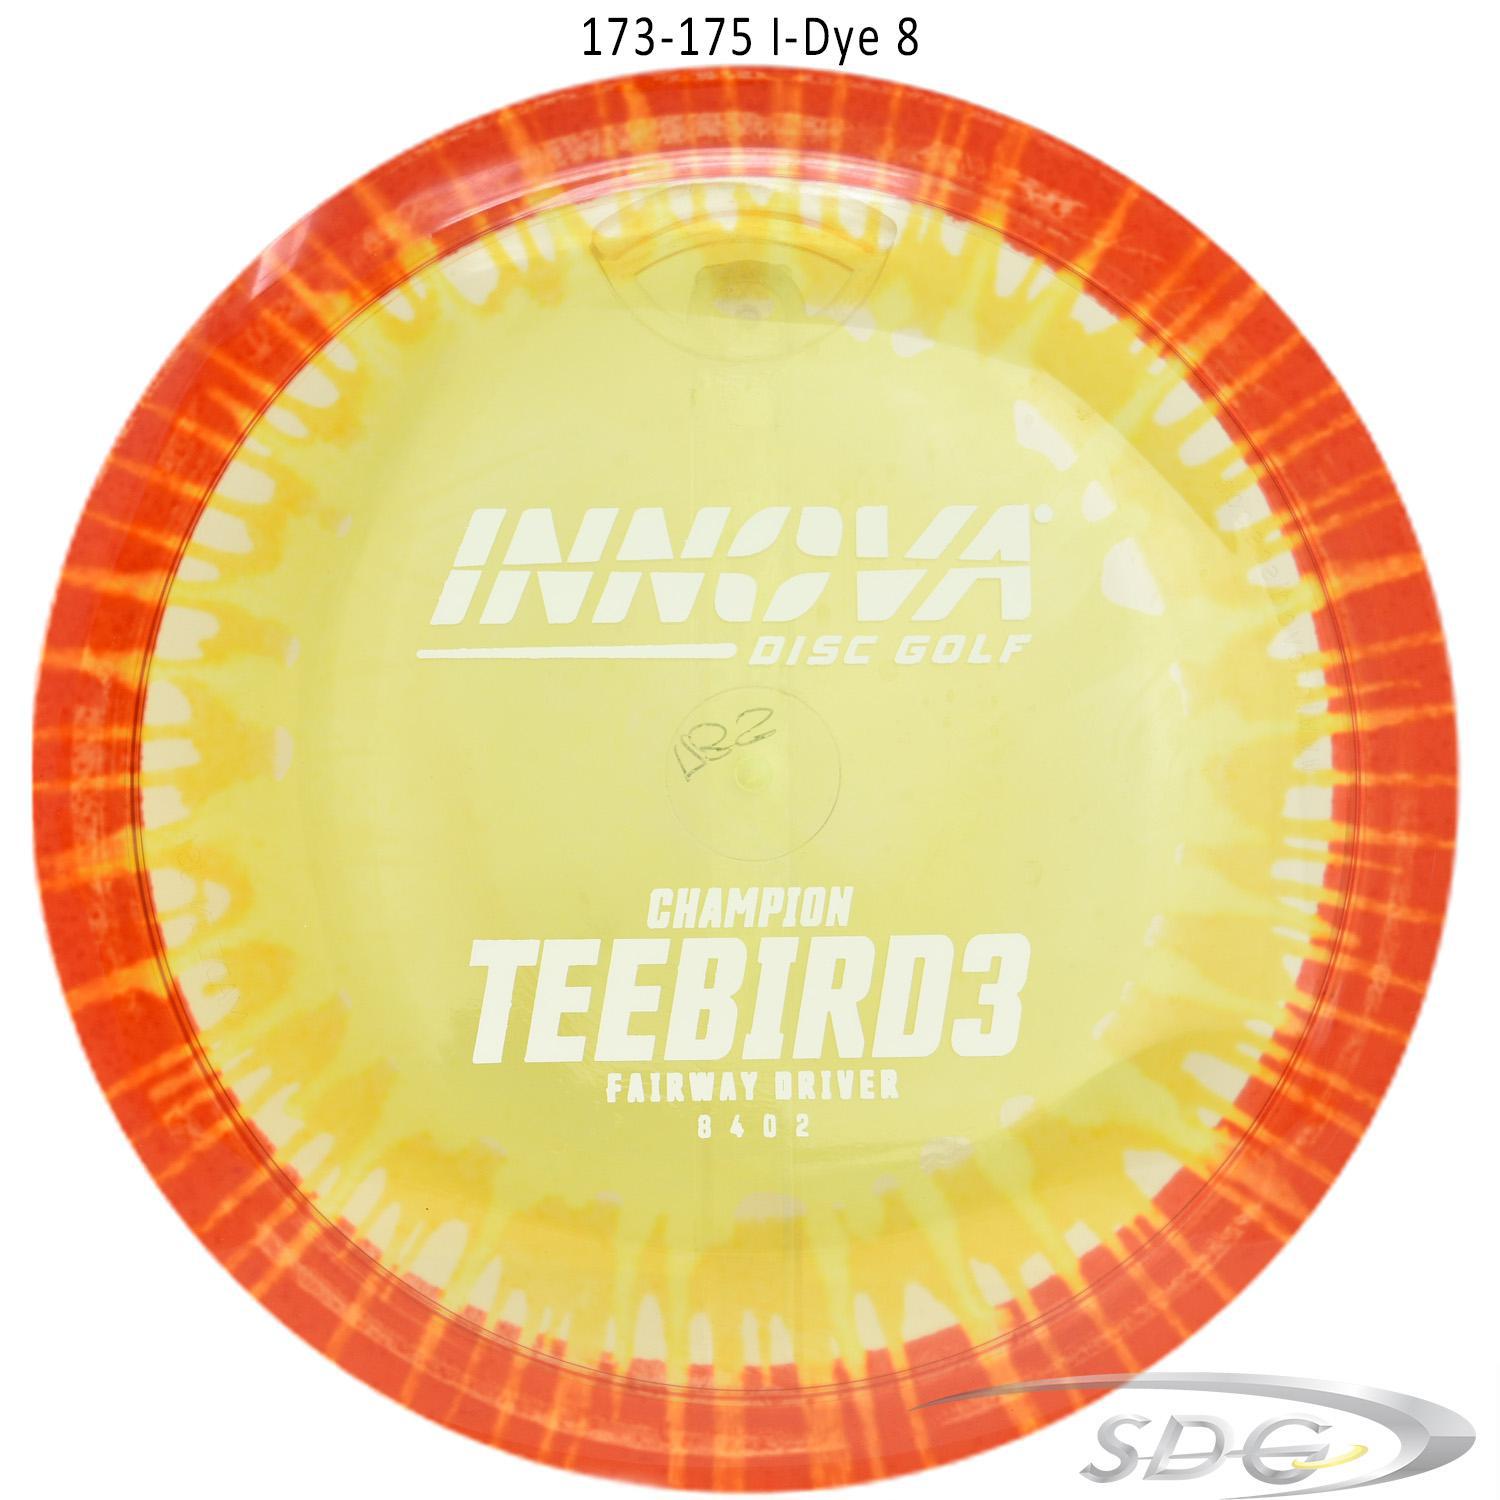 innova-champion-teebird3-i-dye-disc-golf-fairway-driver 173-175 I-Dye 8 